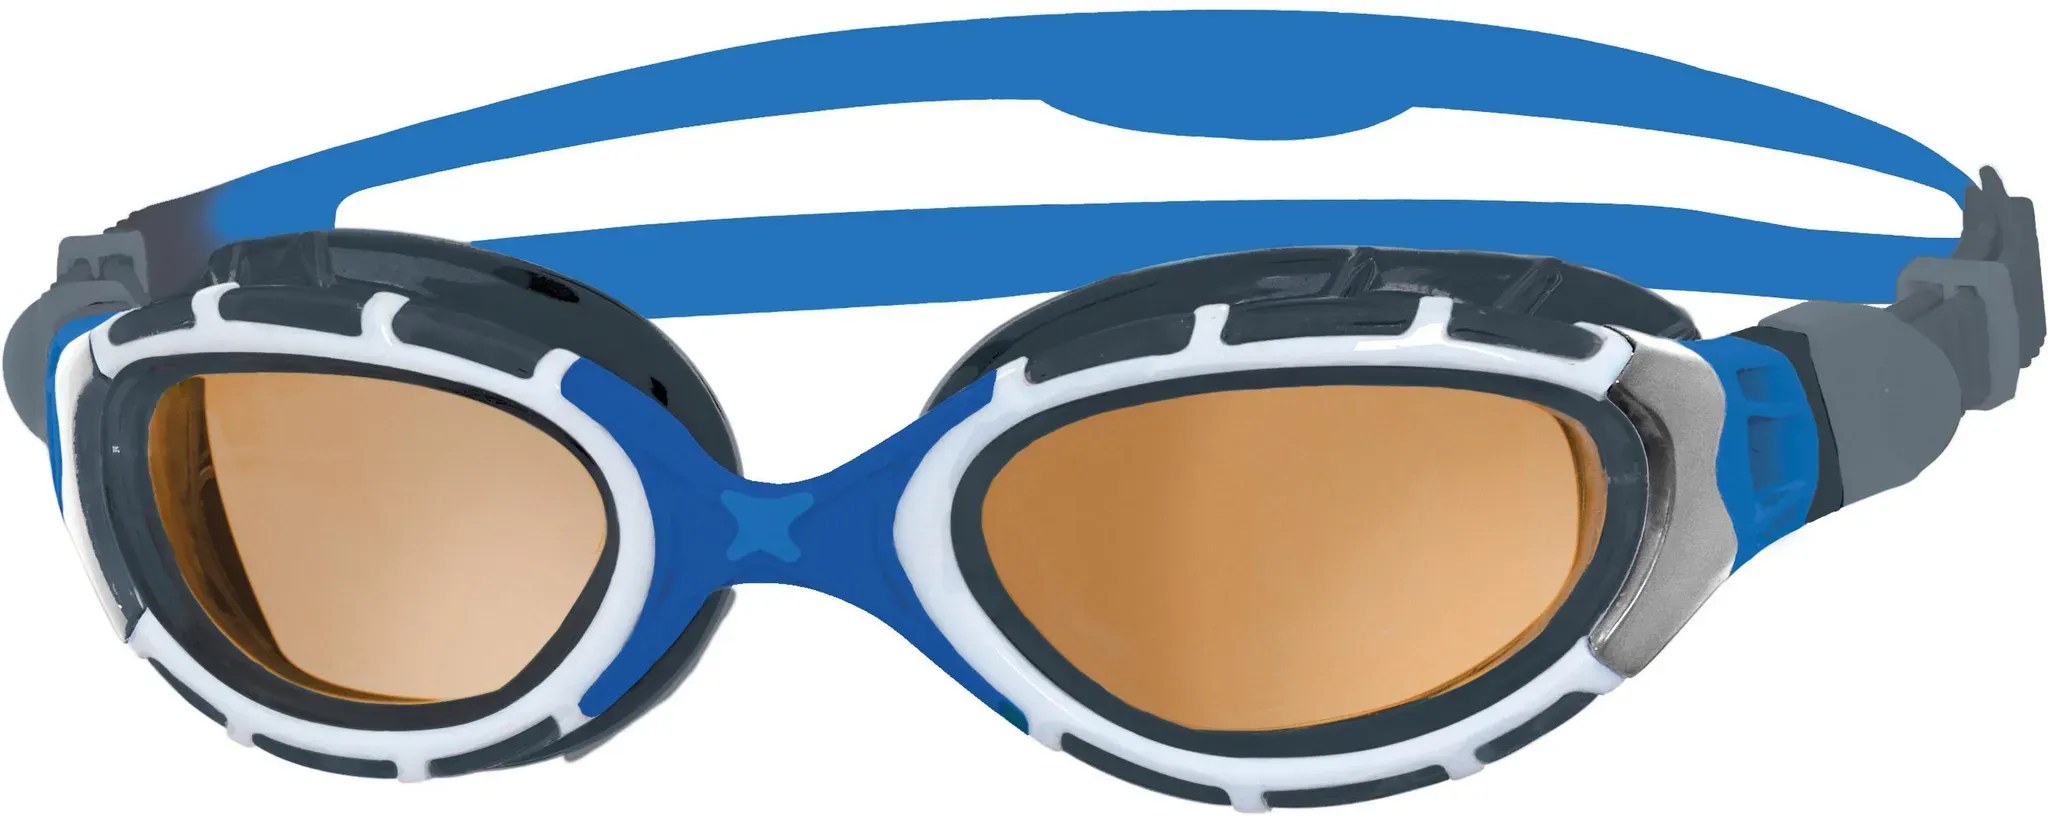 ZOGGS Predator Flex Polarized Ultra Brille in blue grey-polarized copper, Größe REGULAR - blau